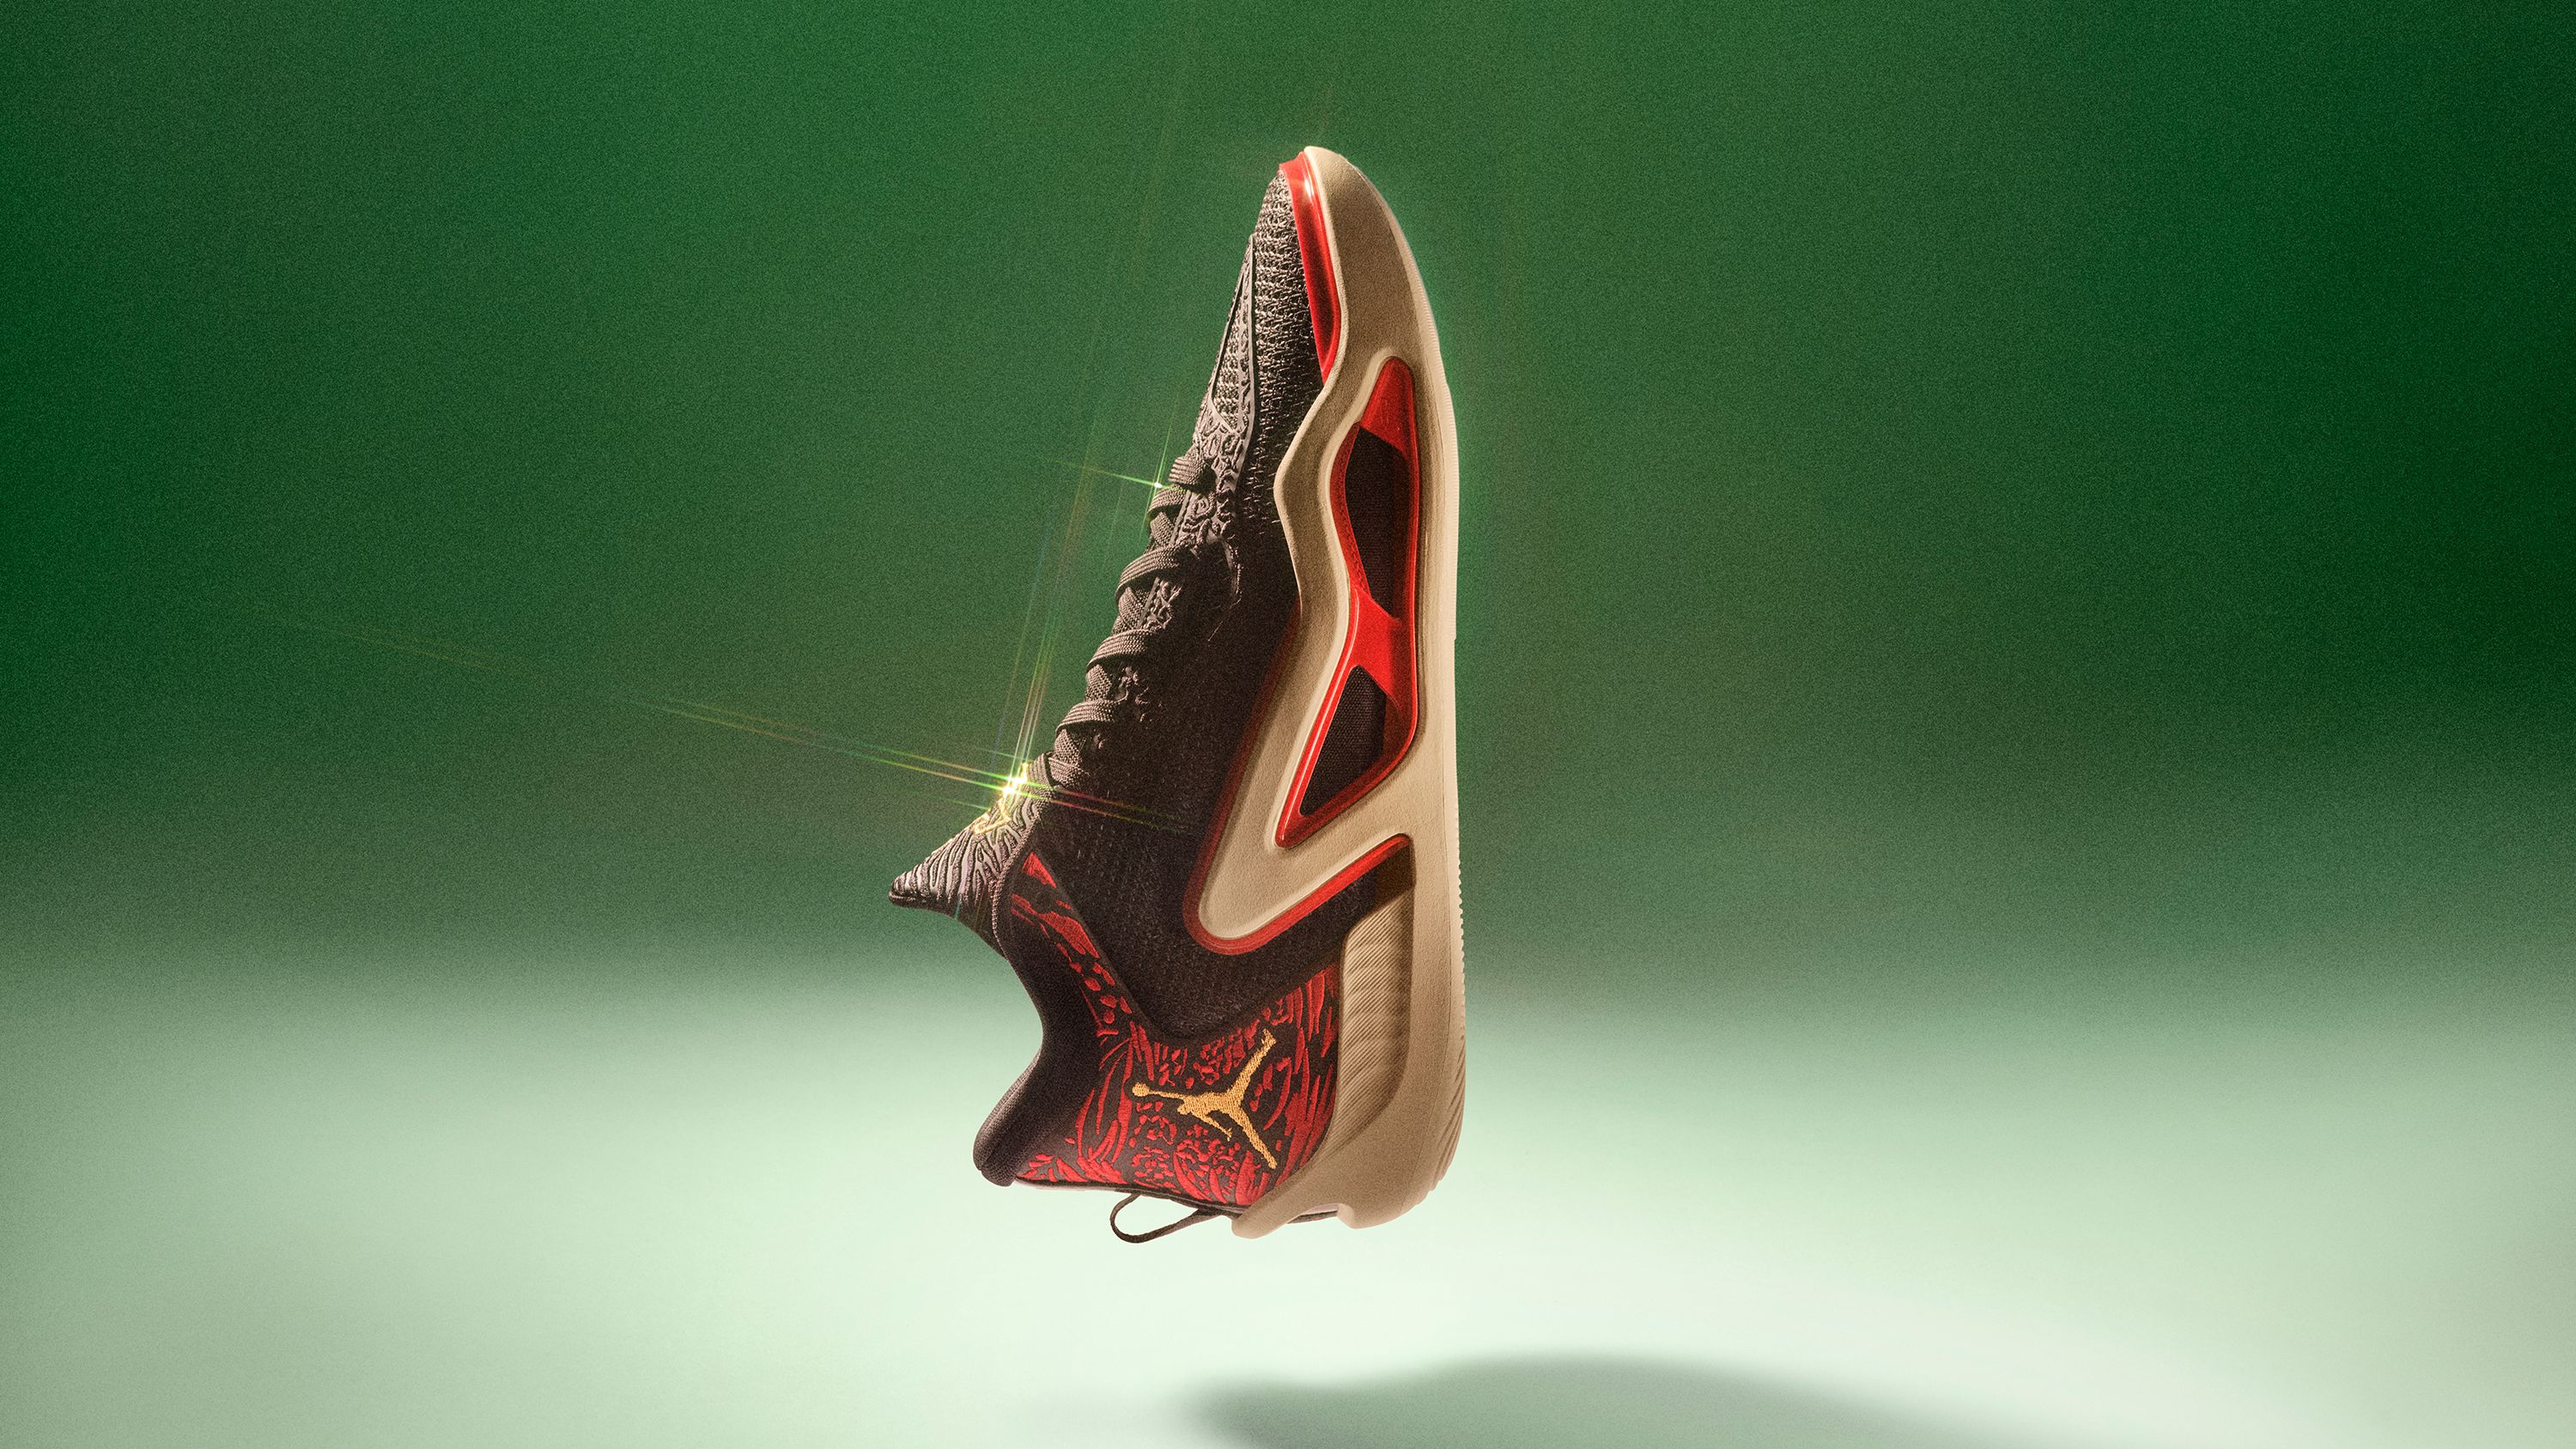 Jordan Brand, Jayson Tatum unveil his first signature shoe, the Tatum 1 –  NBC Sports Boston